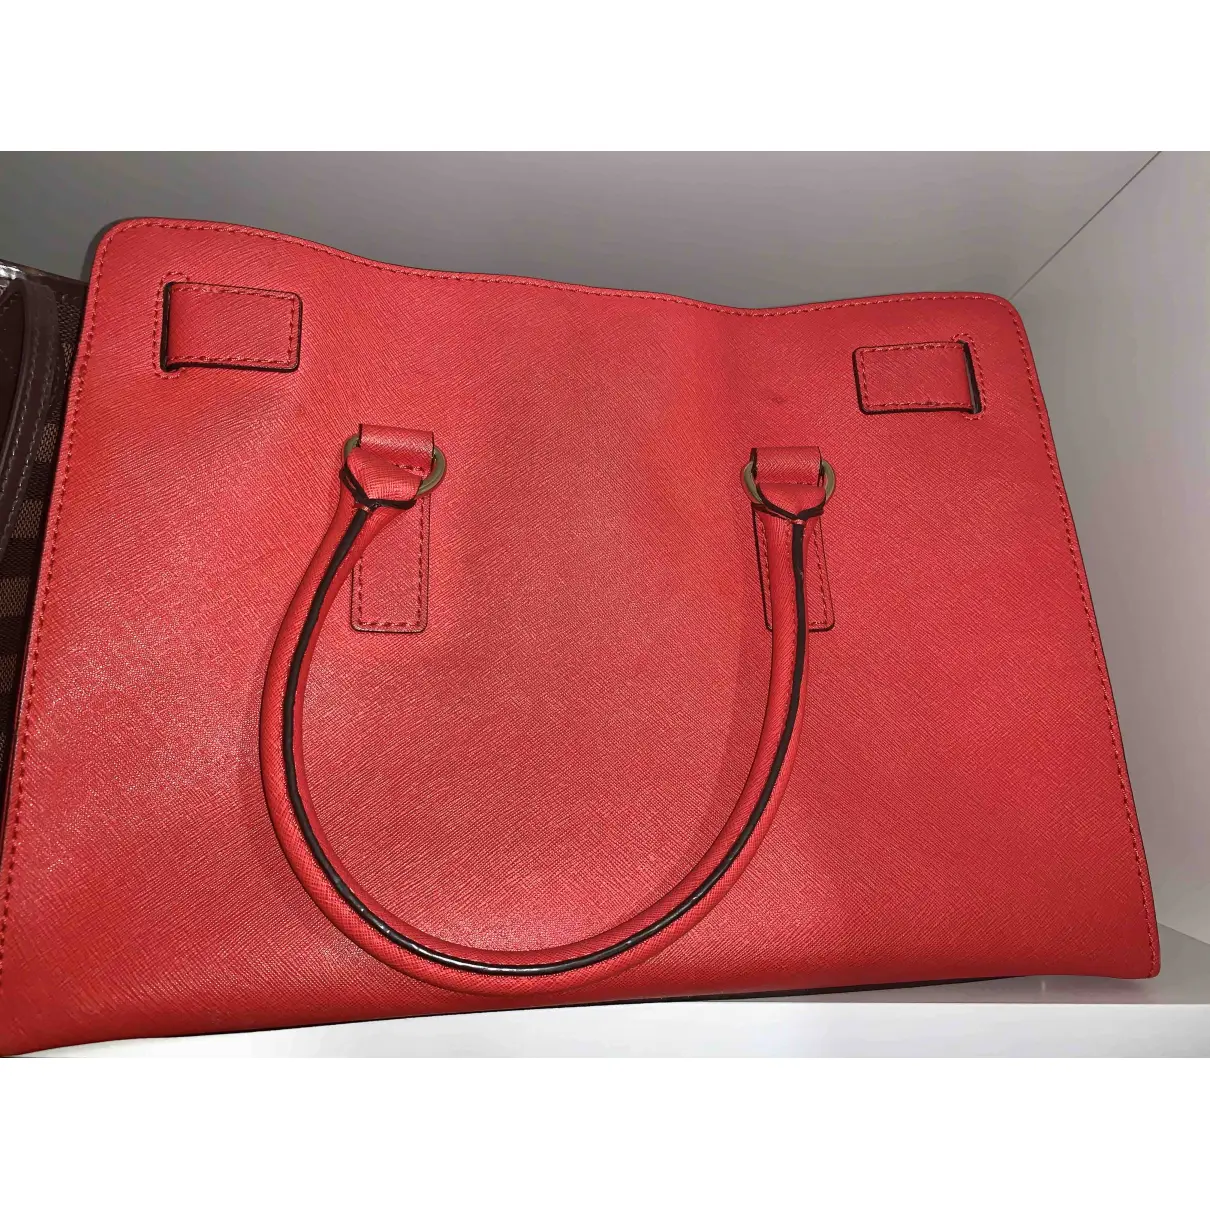 Buy Michael Kors Hamilton leather handbag online